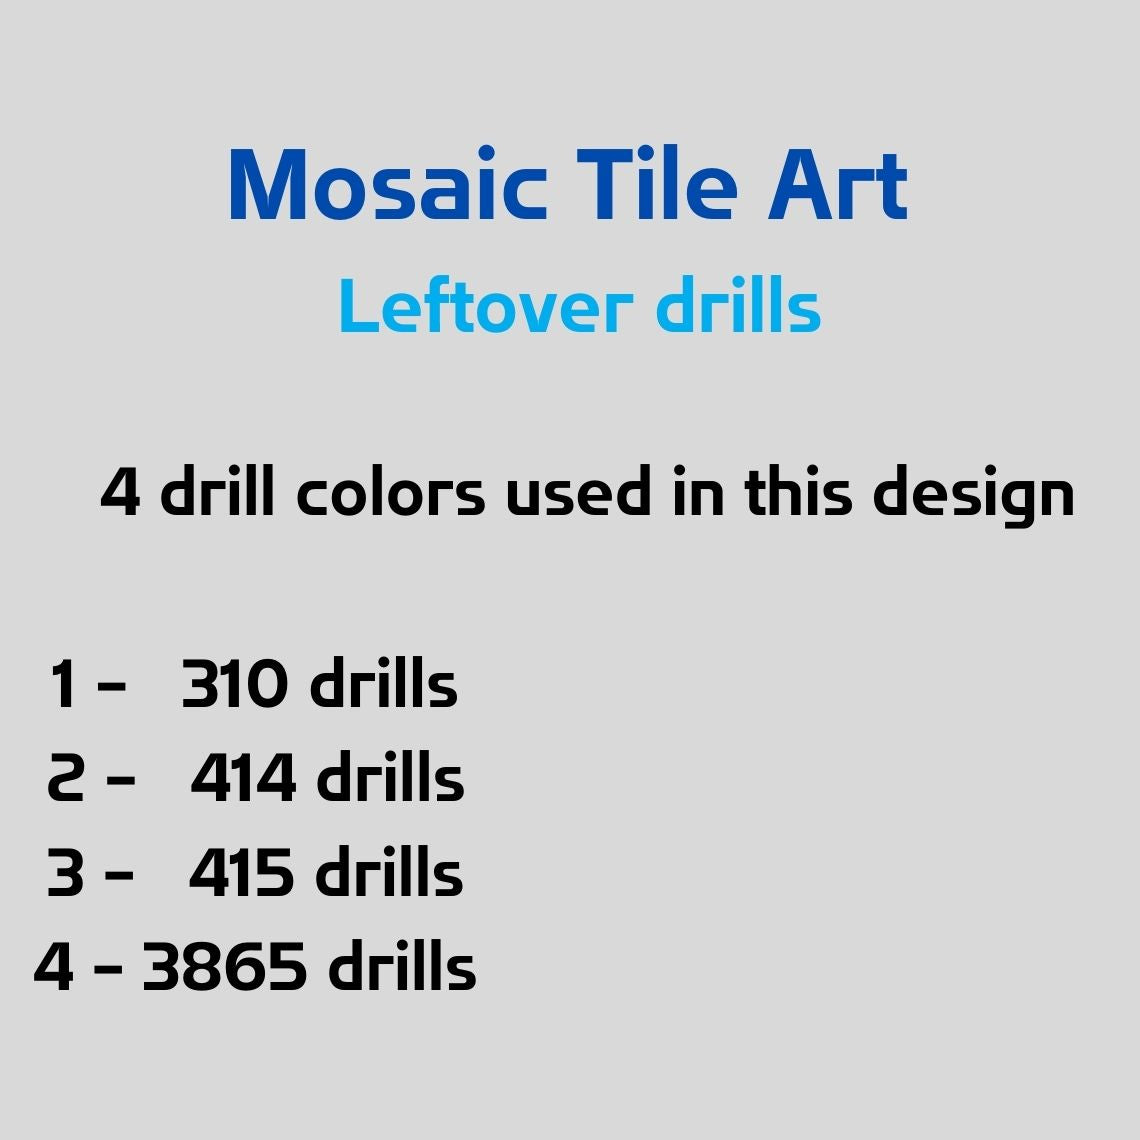 Mosaic Tile Art - Leftover drills count